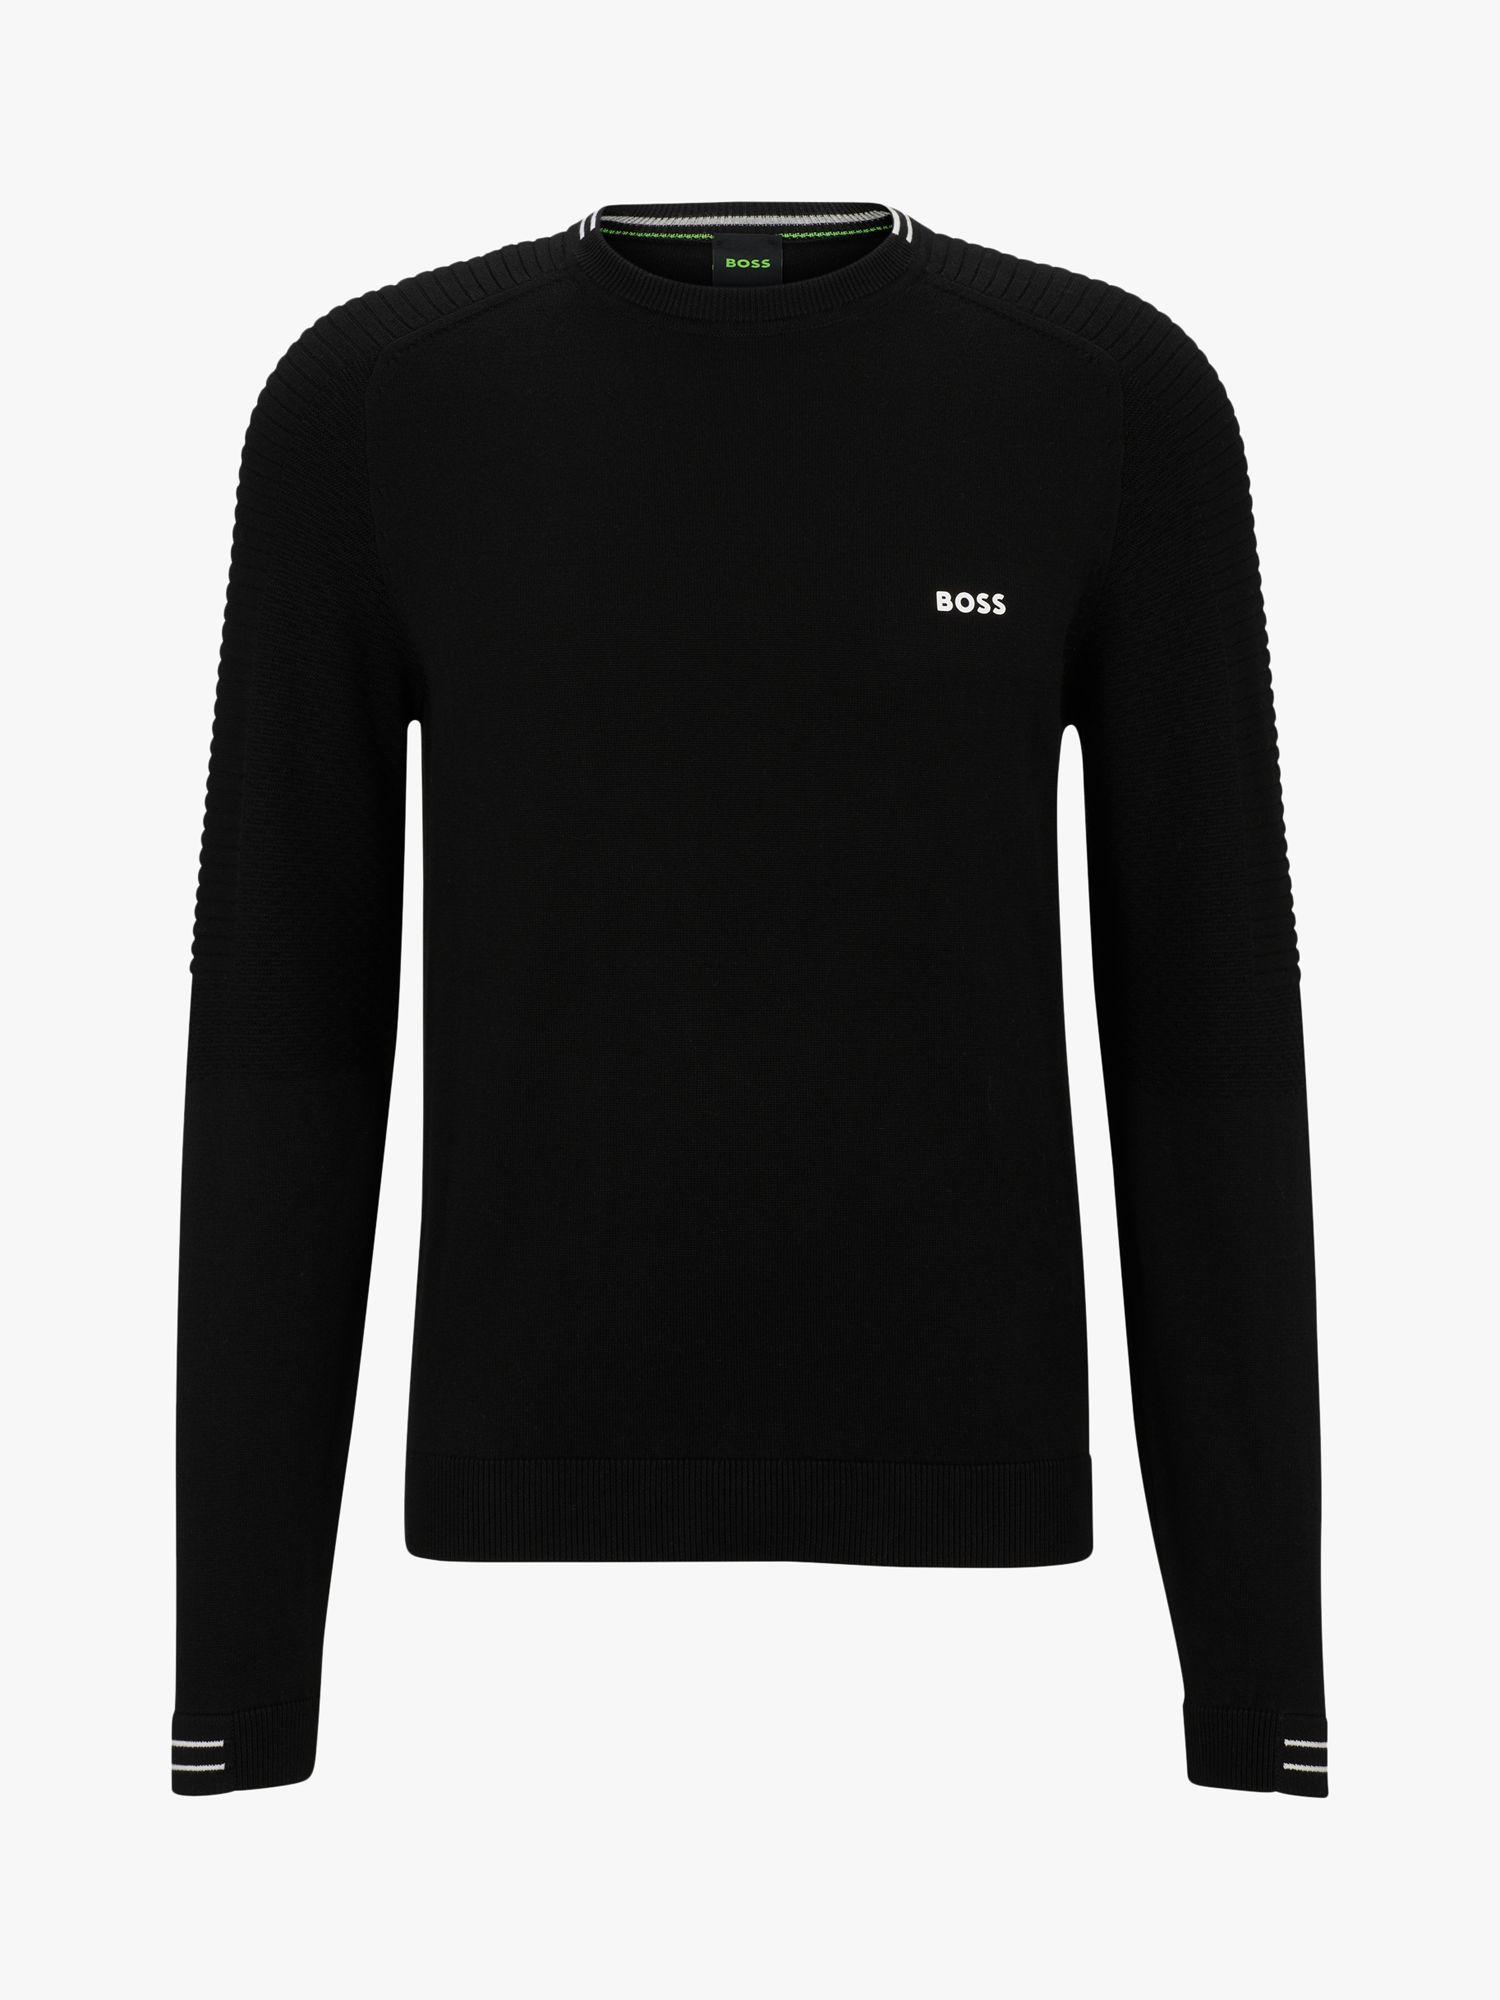 BOSS Rolet Sweatshirt, Black, S